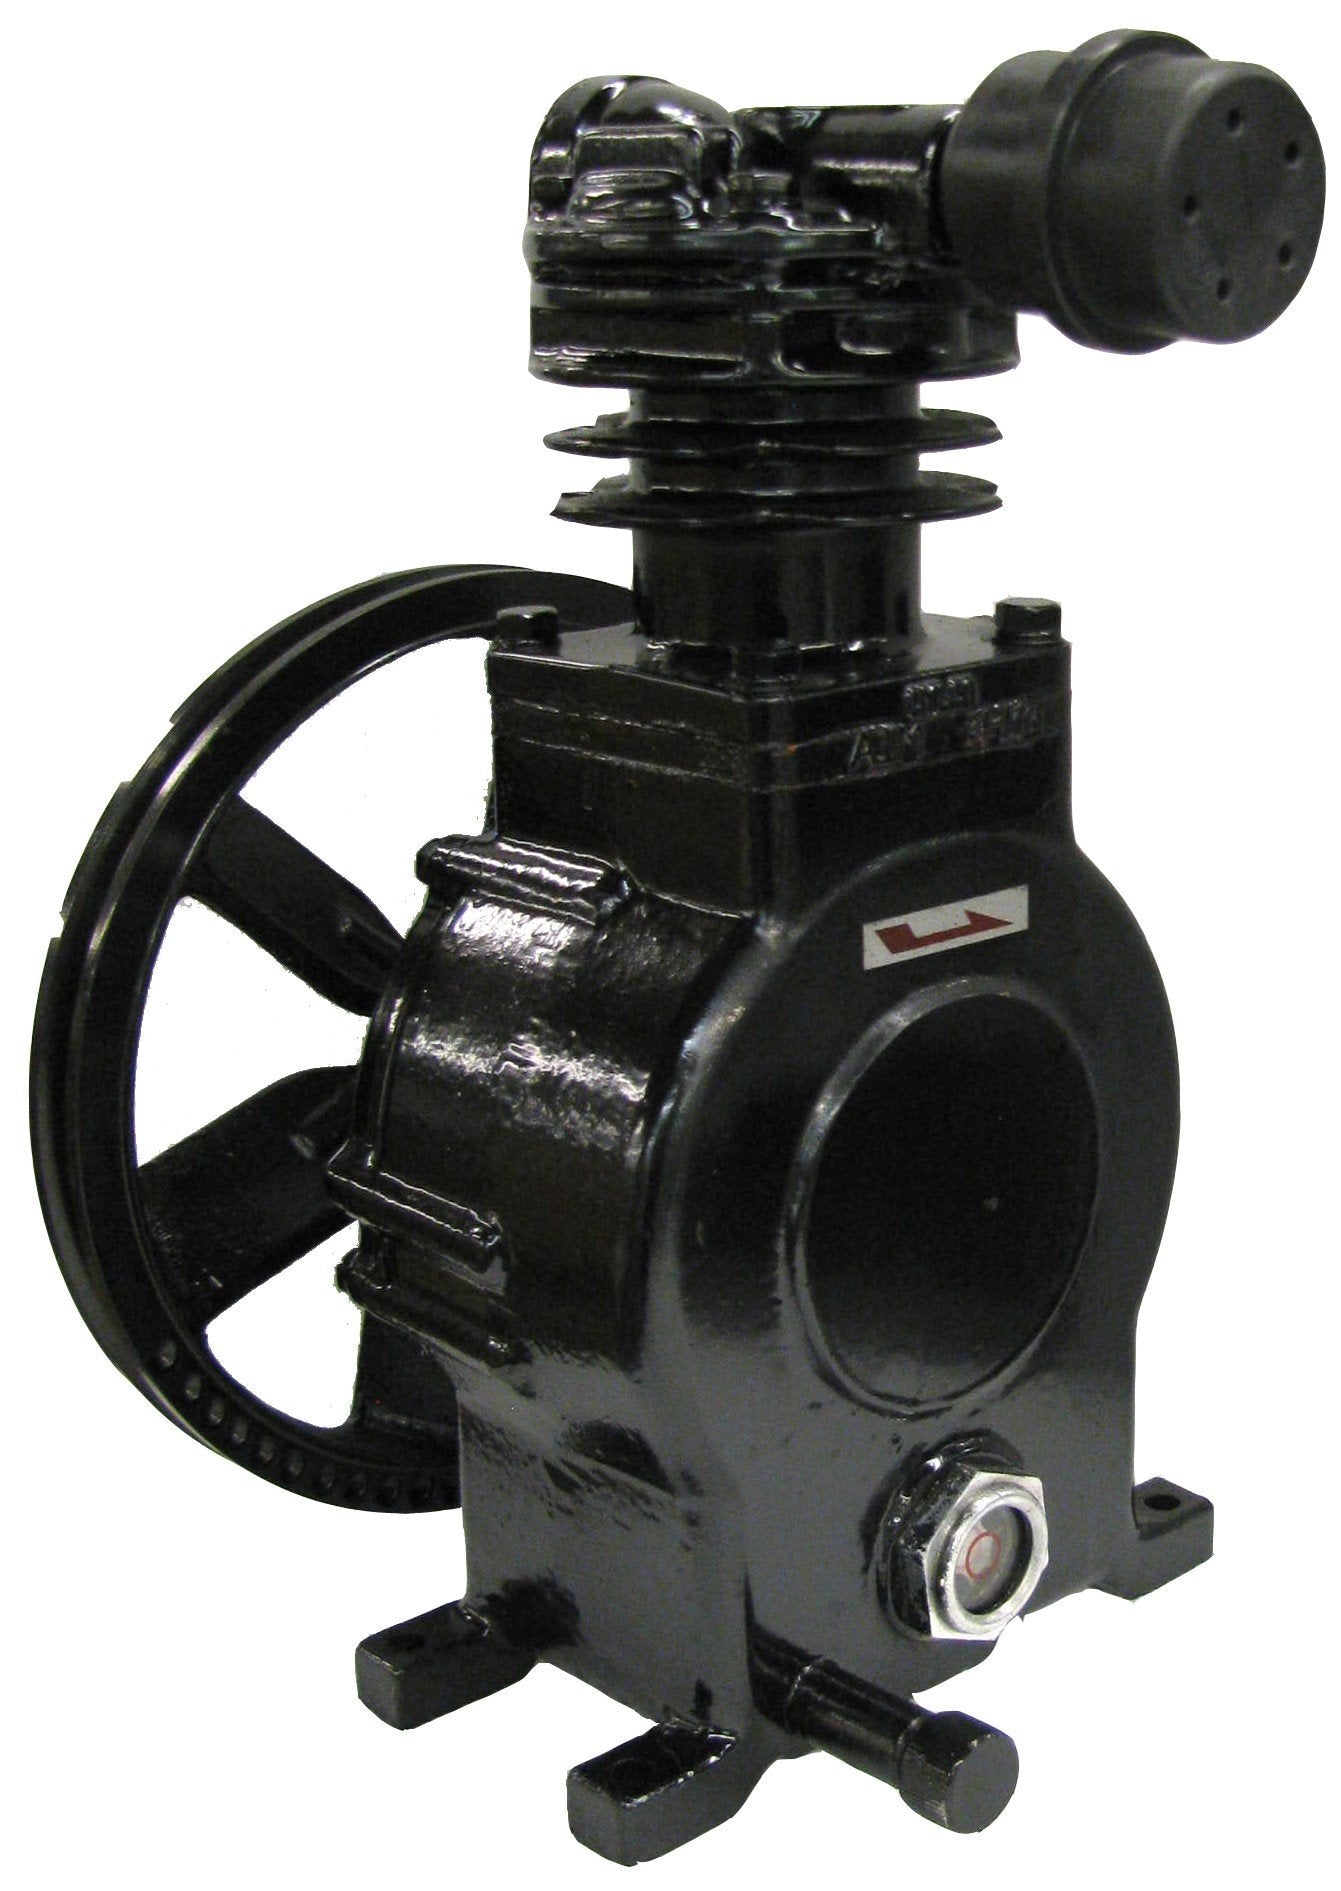 Powerex LPS100A Lubricated Reciprocating Air Compressor  Pump